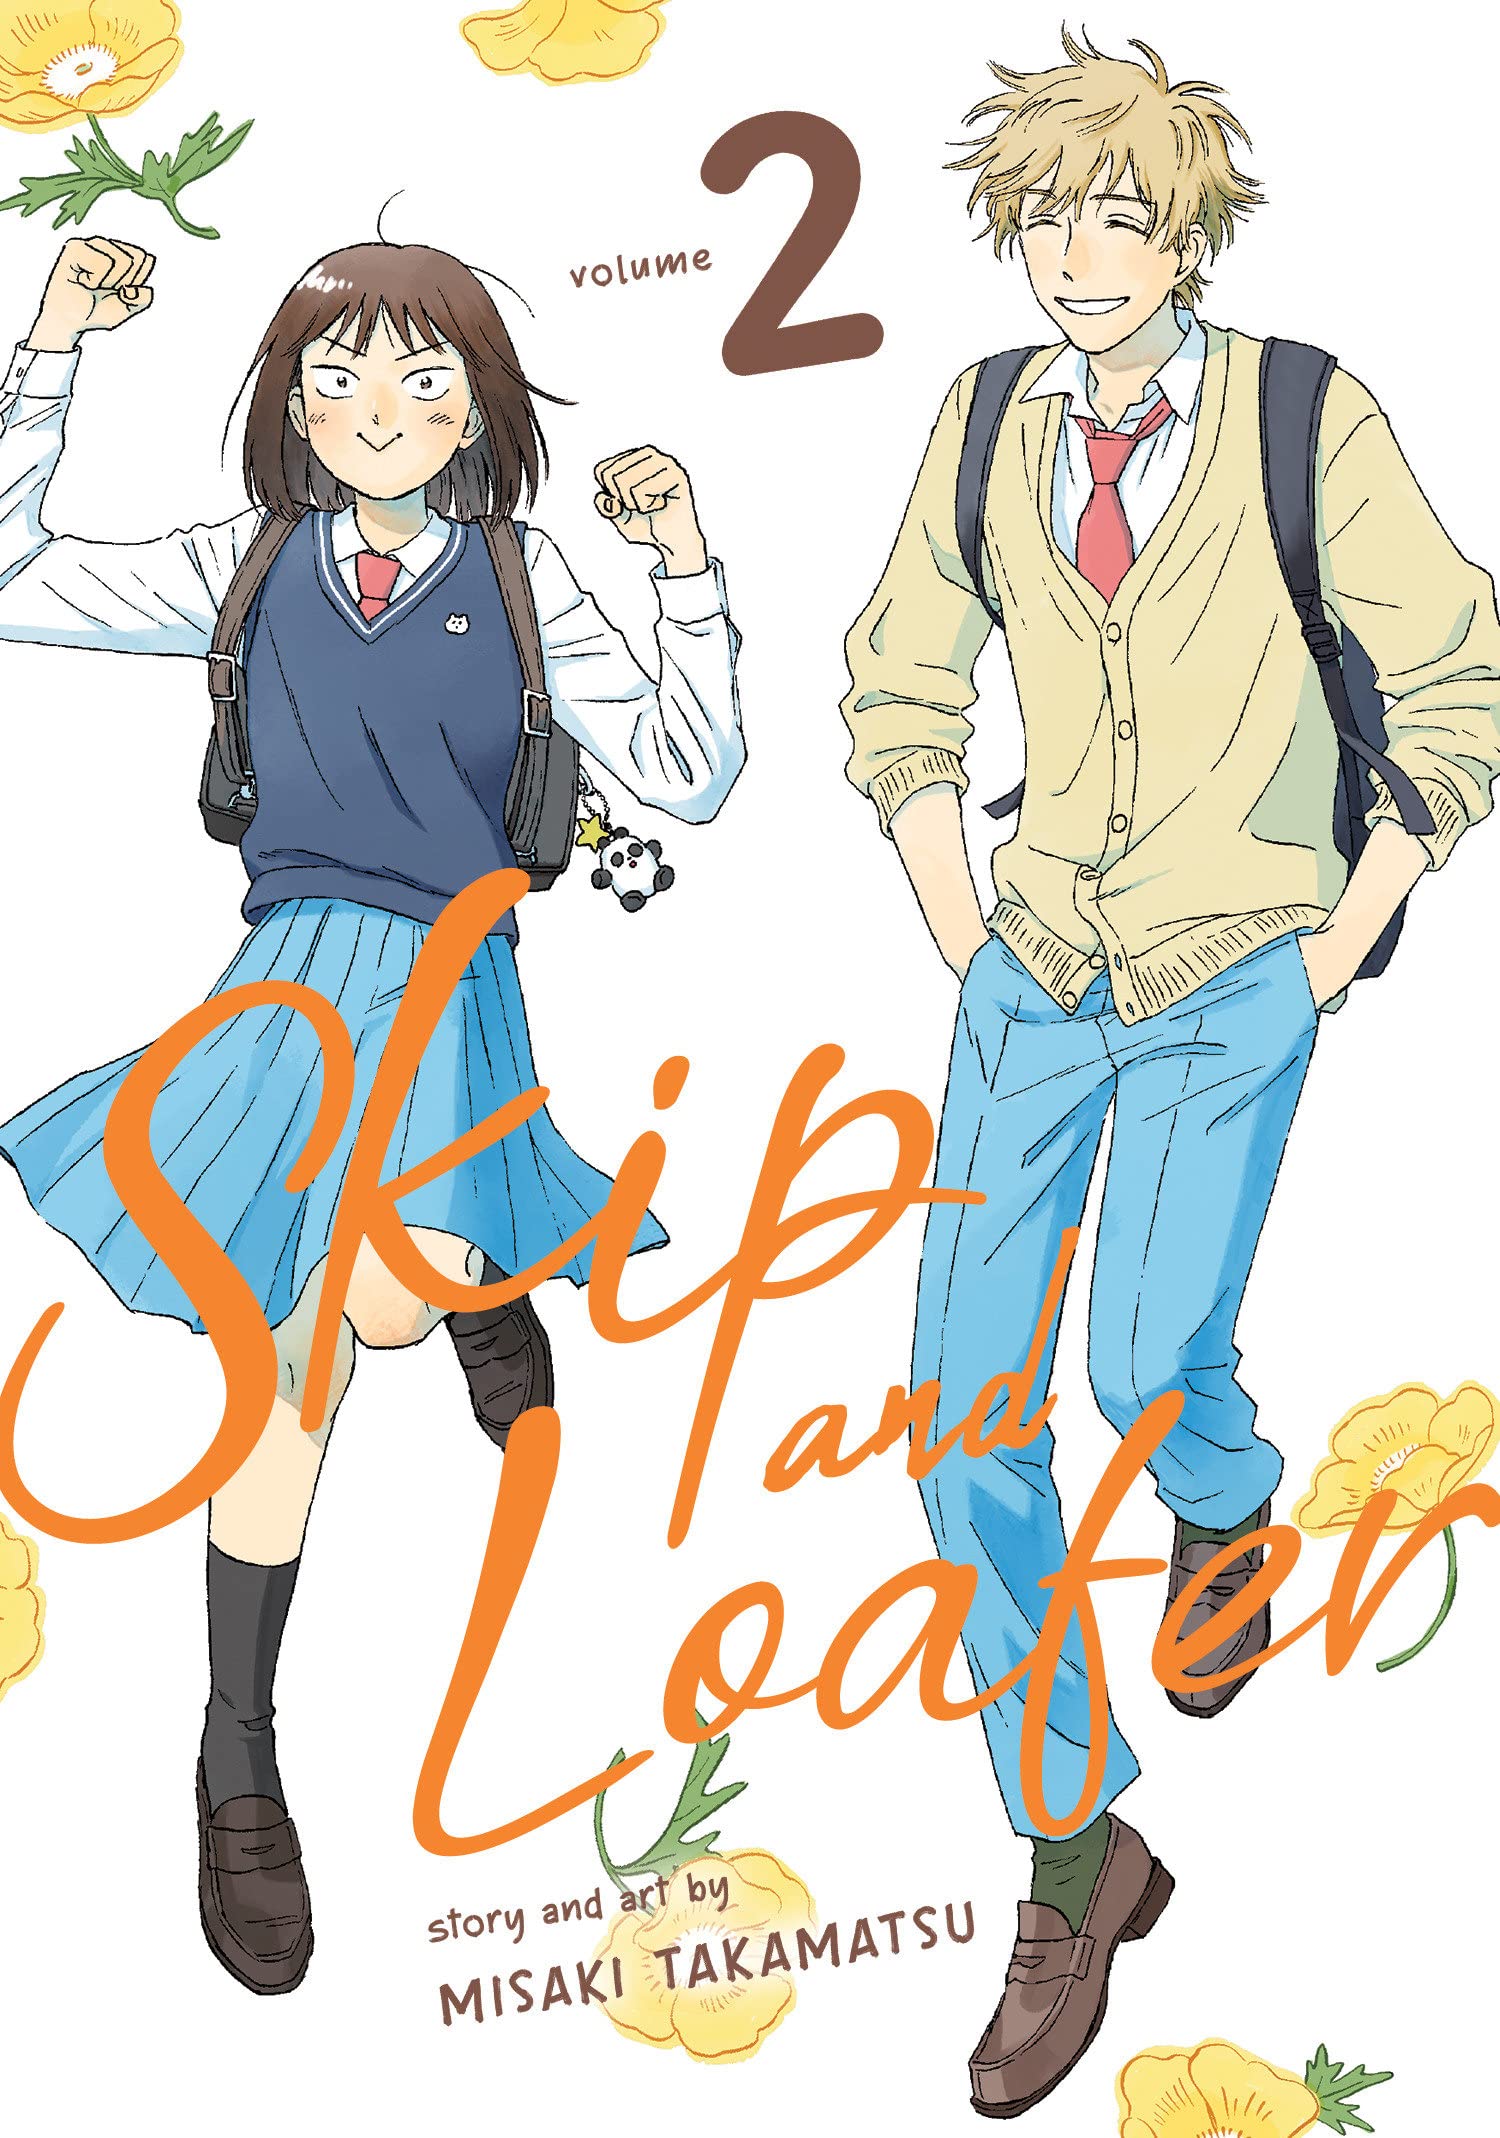 Skip and Loafer - Volume 2